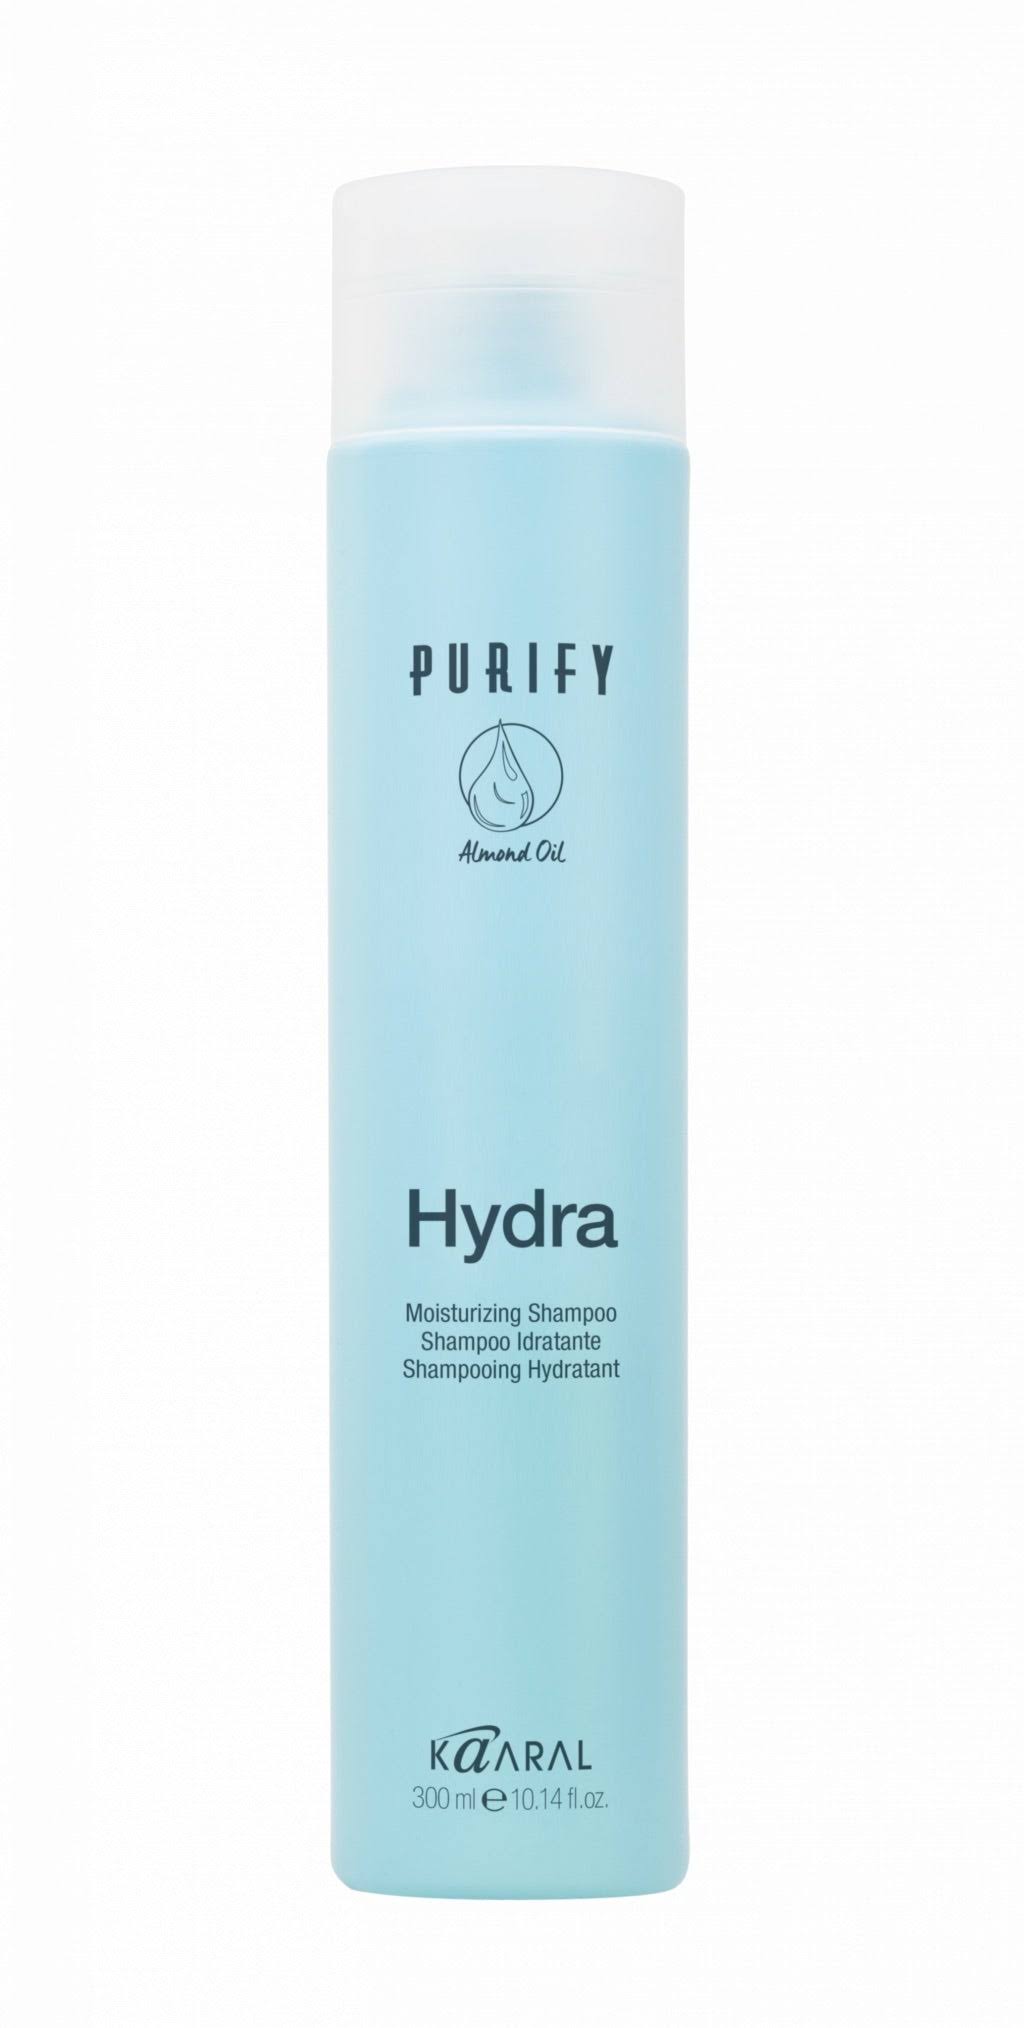 Kaaral Purify Hydra Shampoo - 300ml